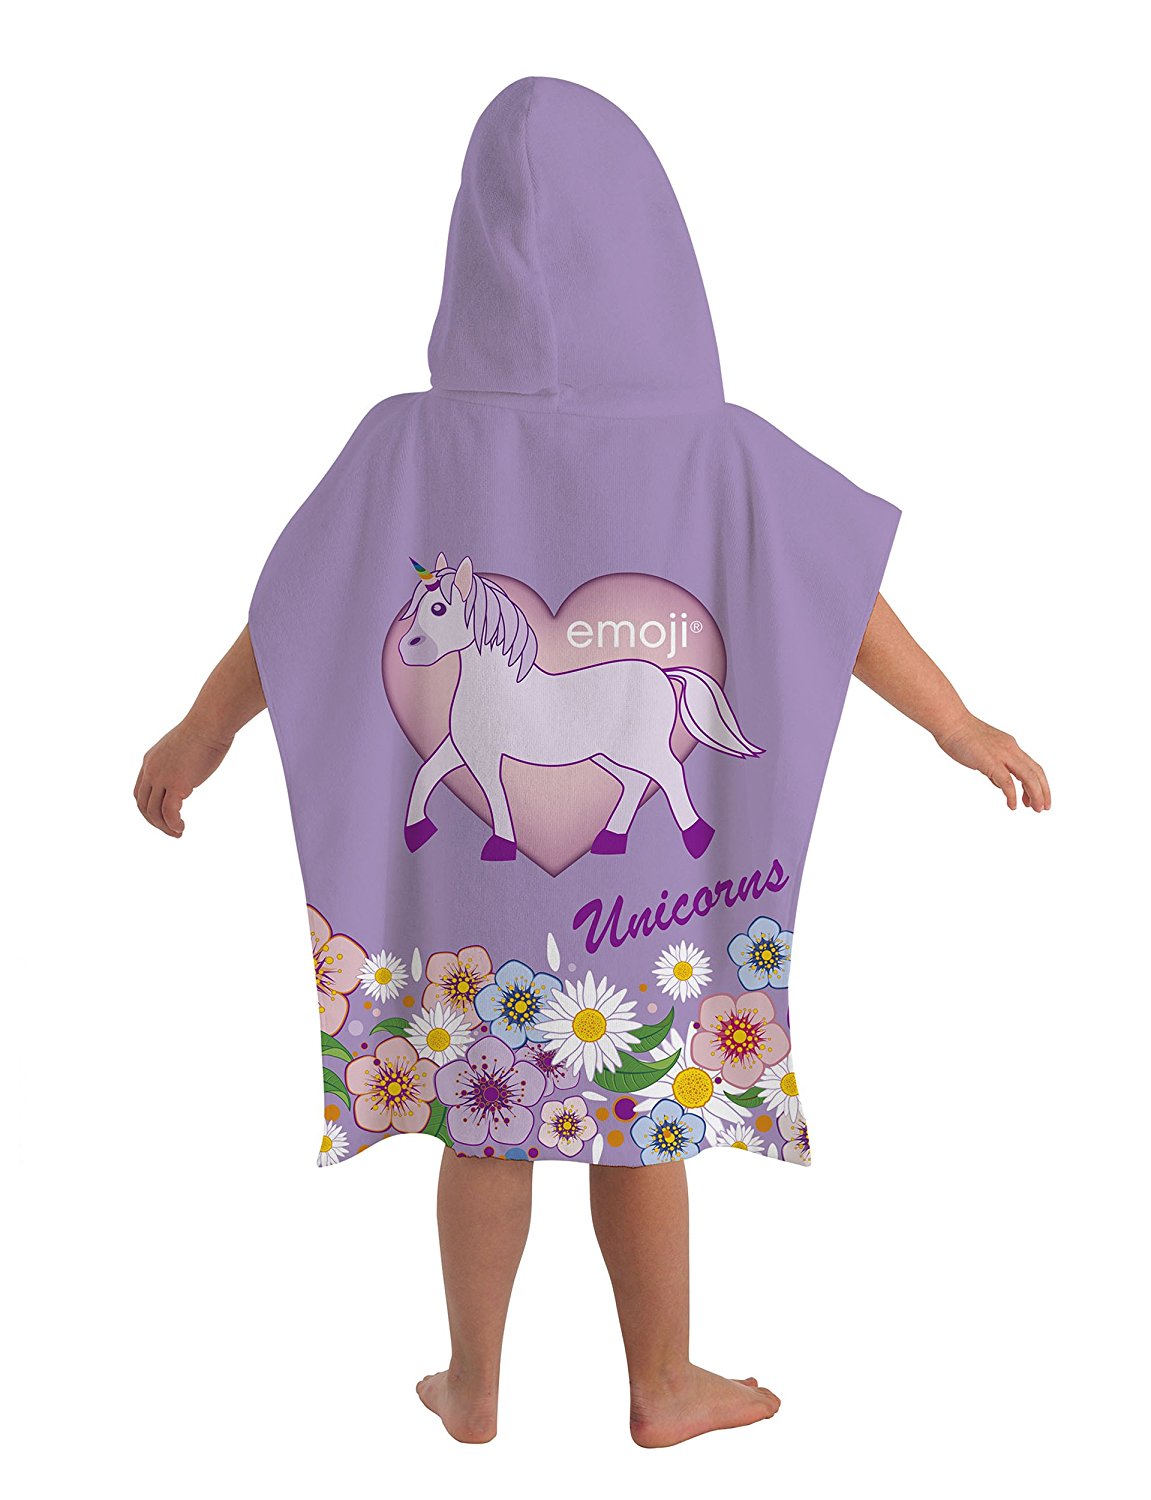 Emoji 'Unicorn' Hooded Kids Multi-colour Poncho Towel